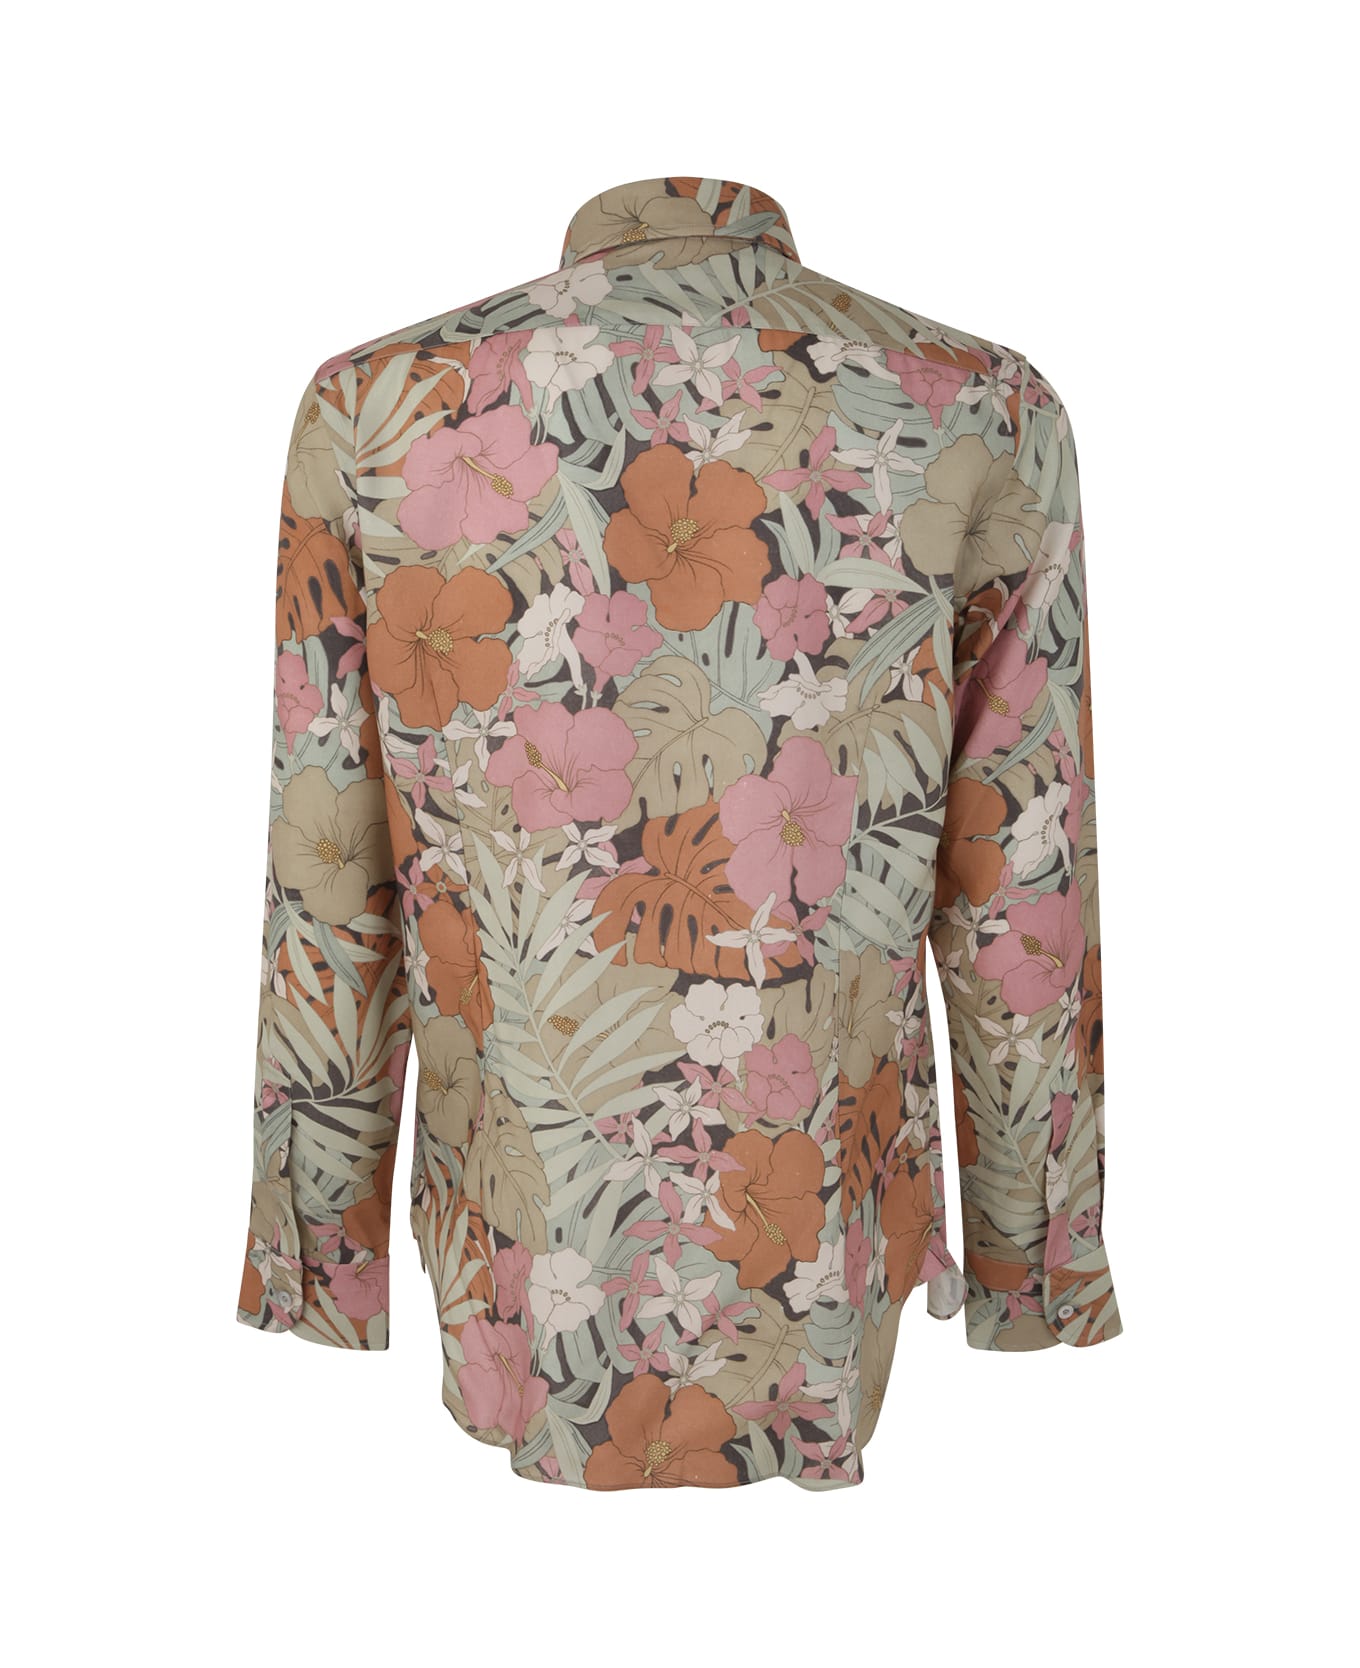 Tom Ford Leisure Man Shirt - Zfgdp Combo Sage Antique Pink シャツ